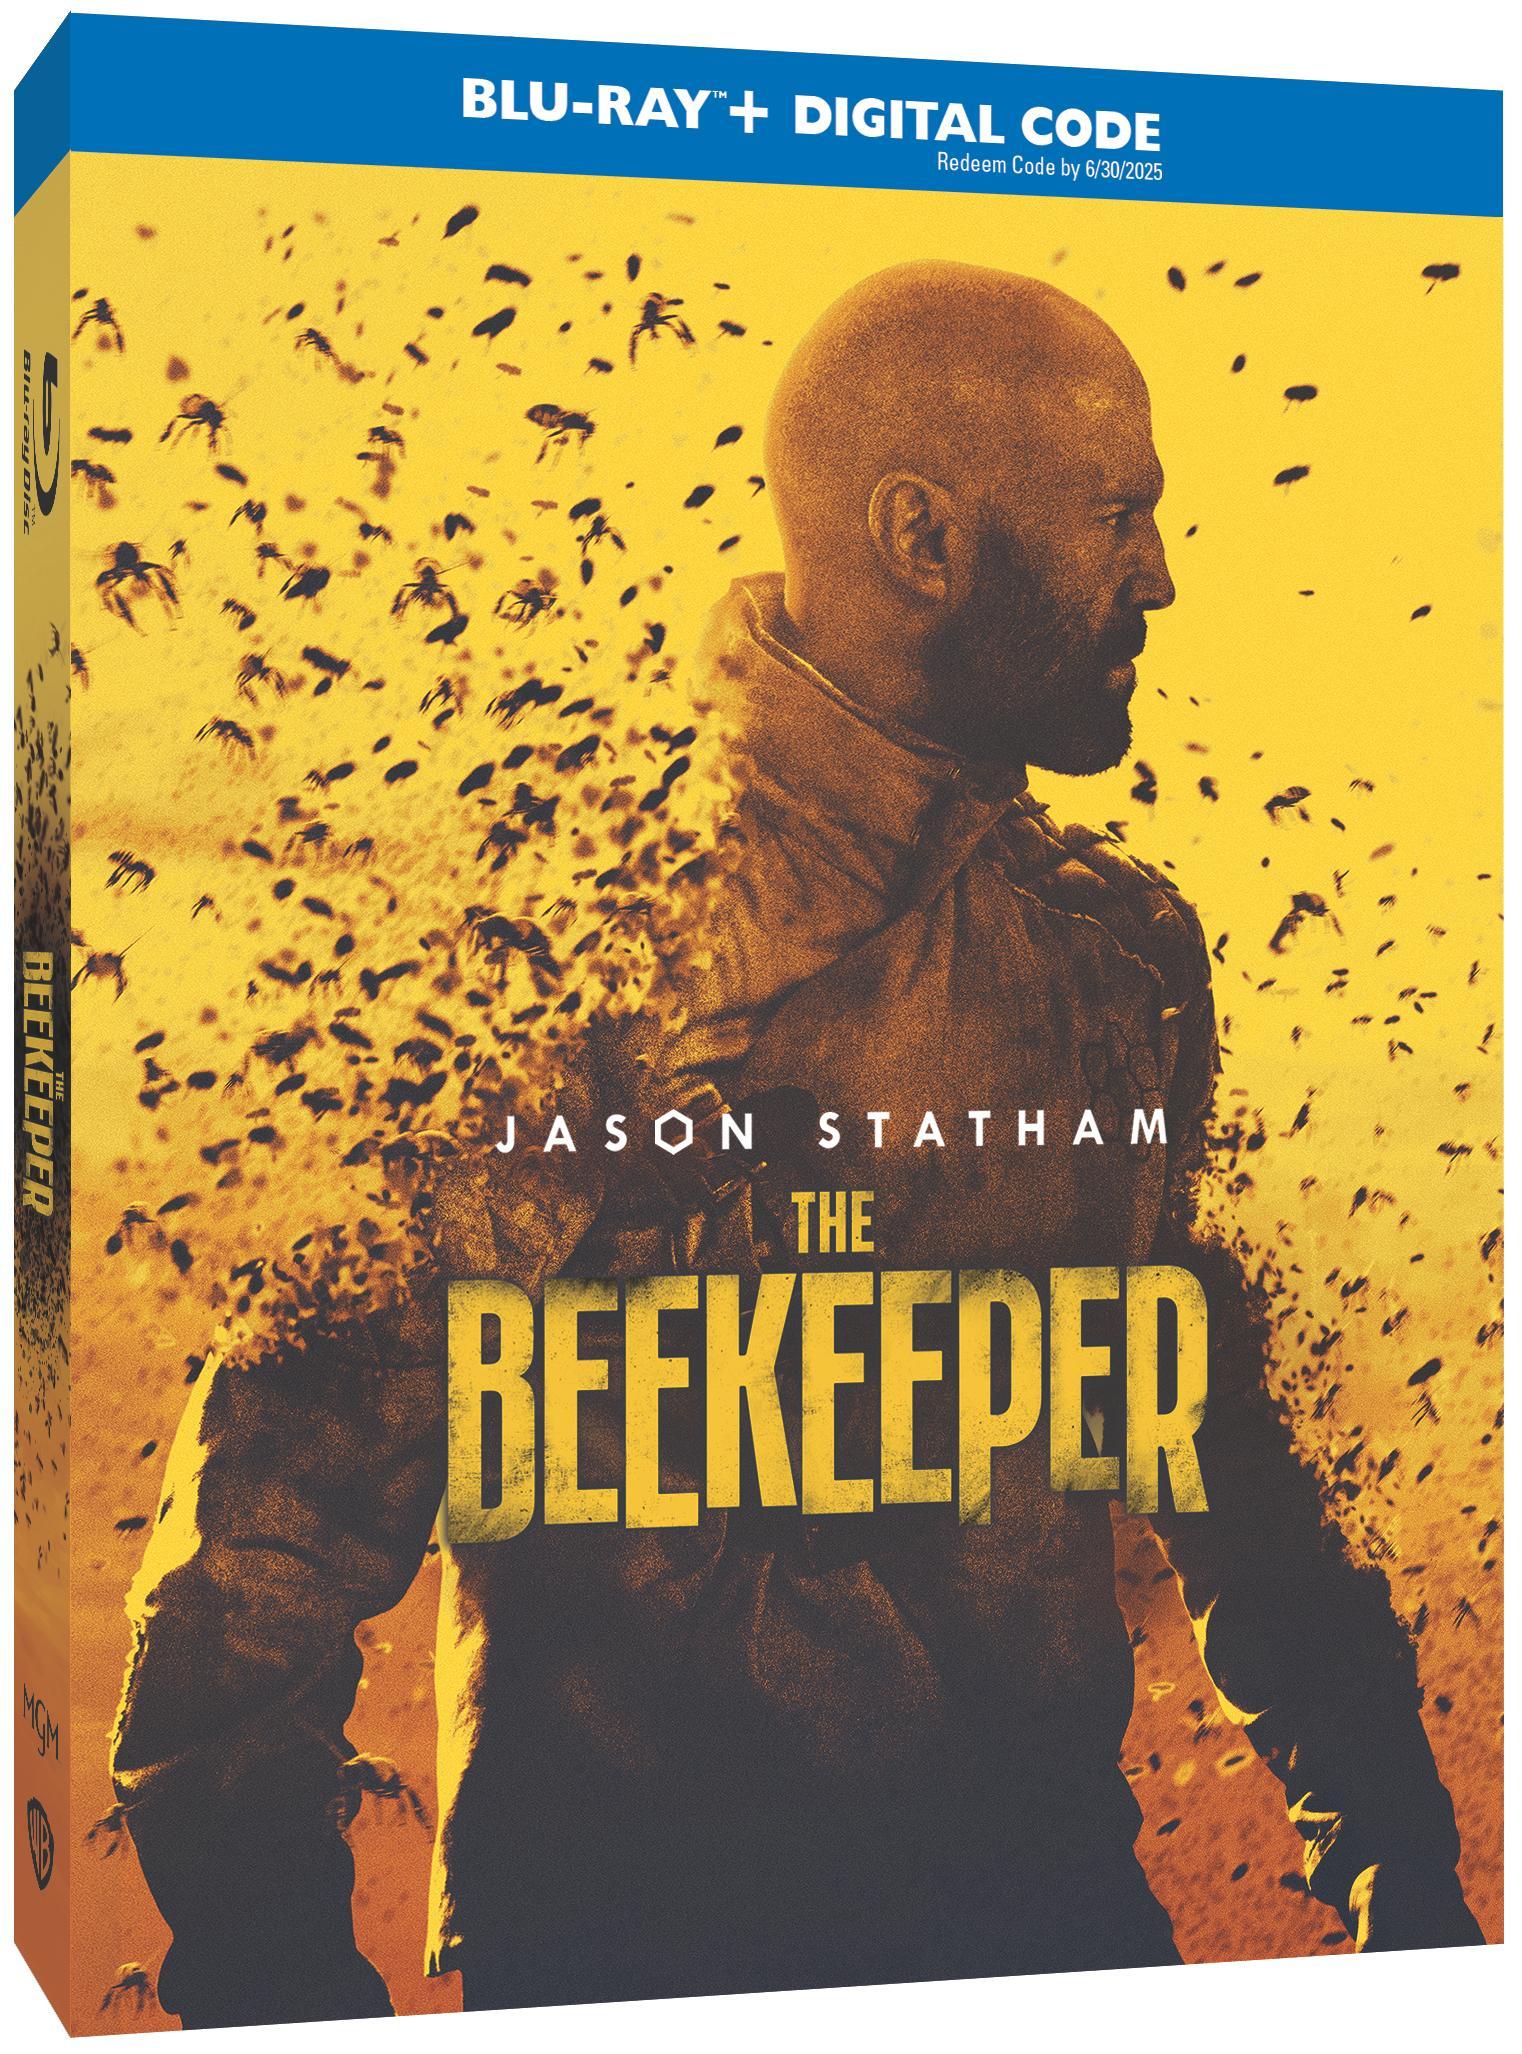 The Beekeeper (Blu-ray + Digital Copy) - image 2 of 3